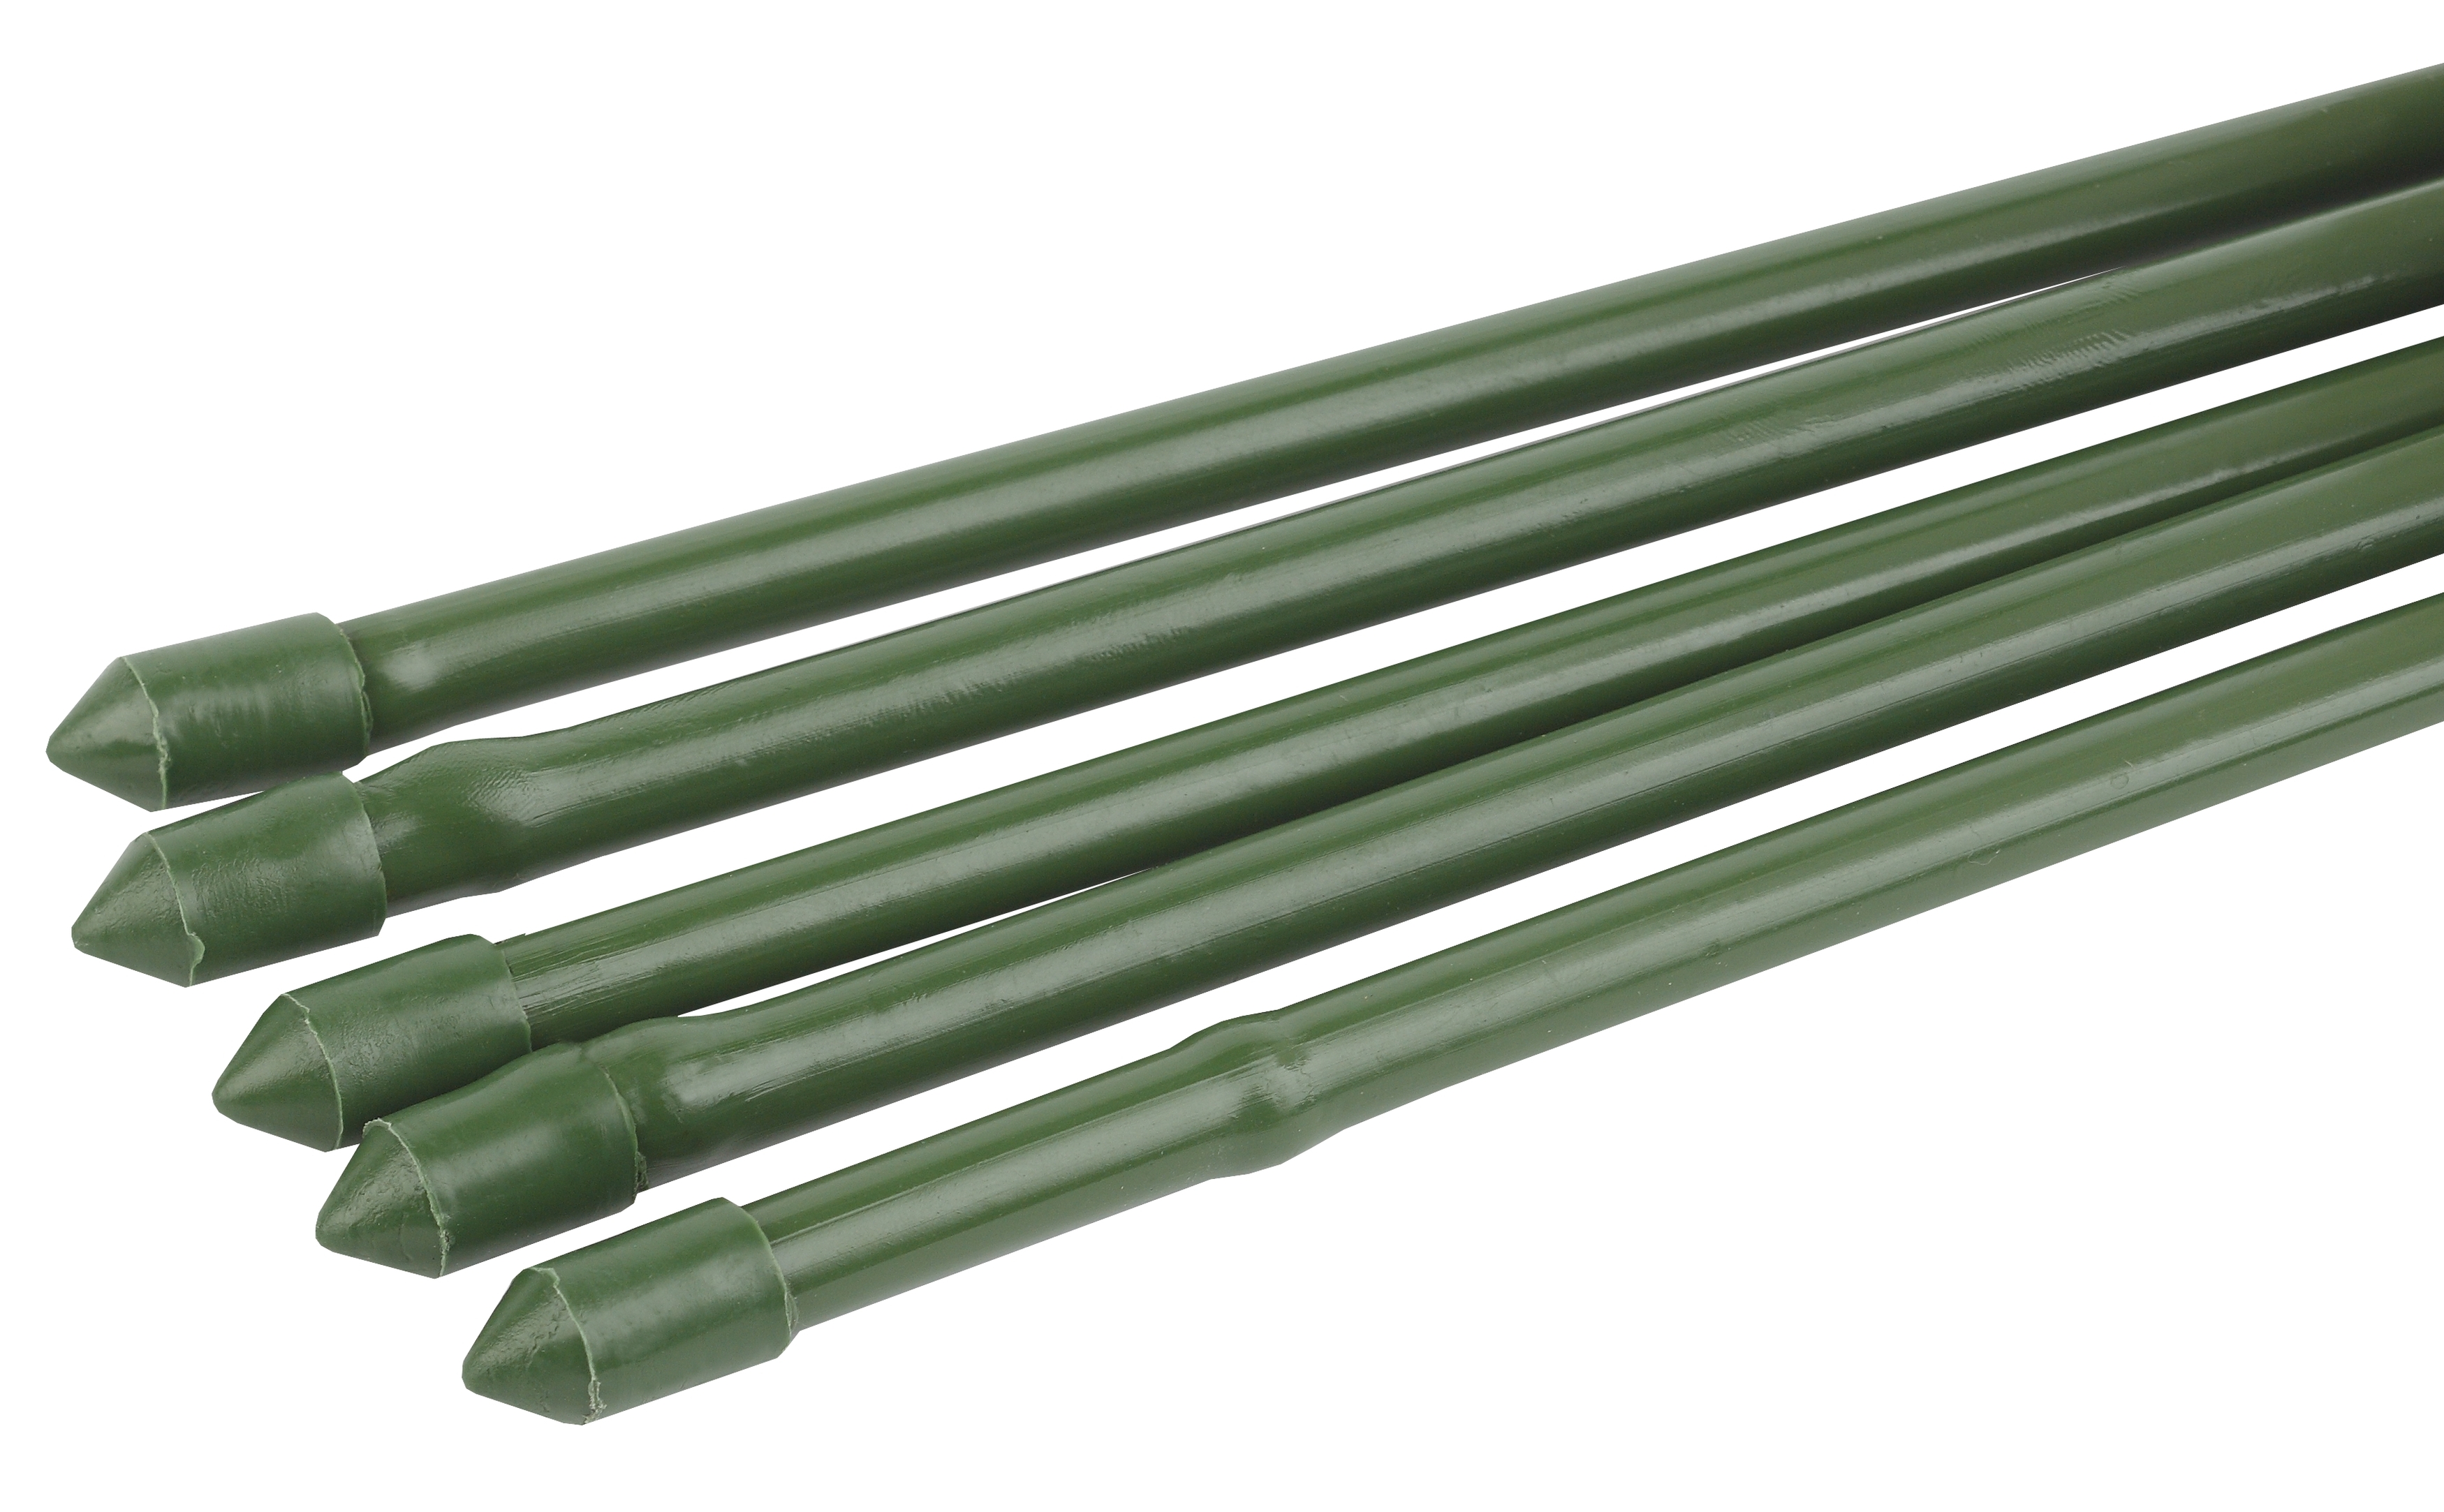 GCSB-11-120 GREEN APPLE Поддержка металл в пластике стиль бамбук 120cм  o 11мм 5шт (Набор 5 шт) (20/